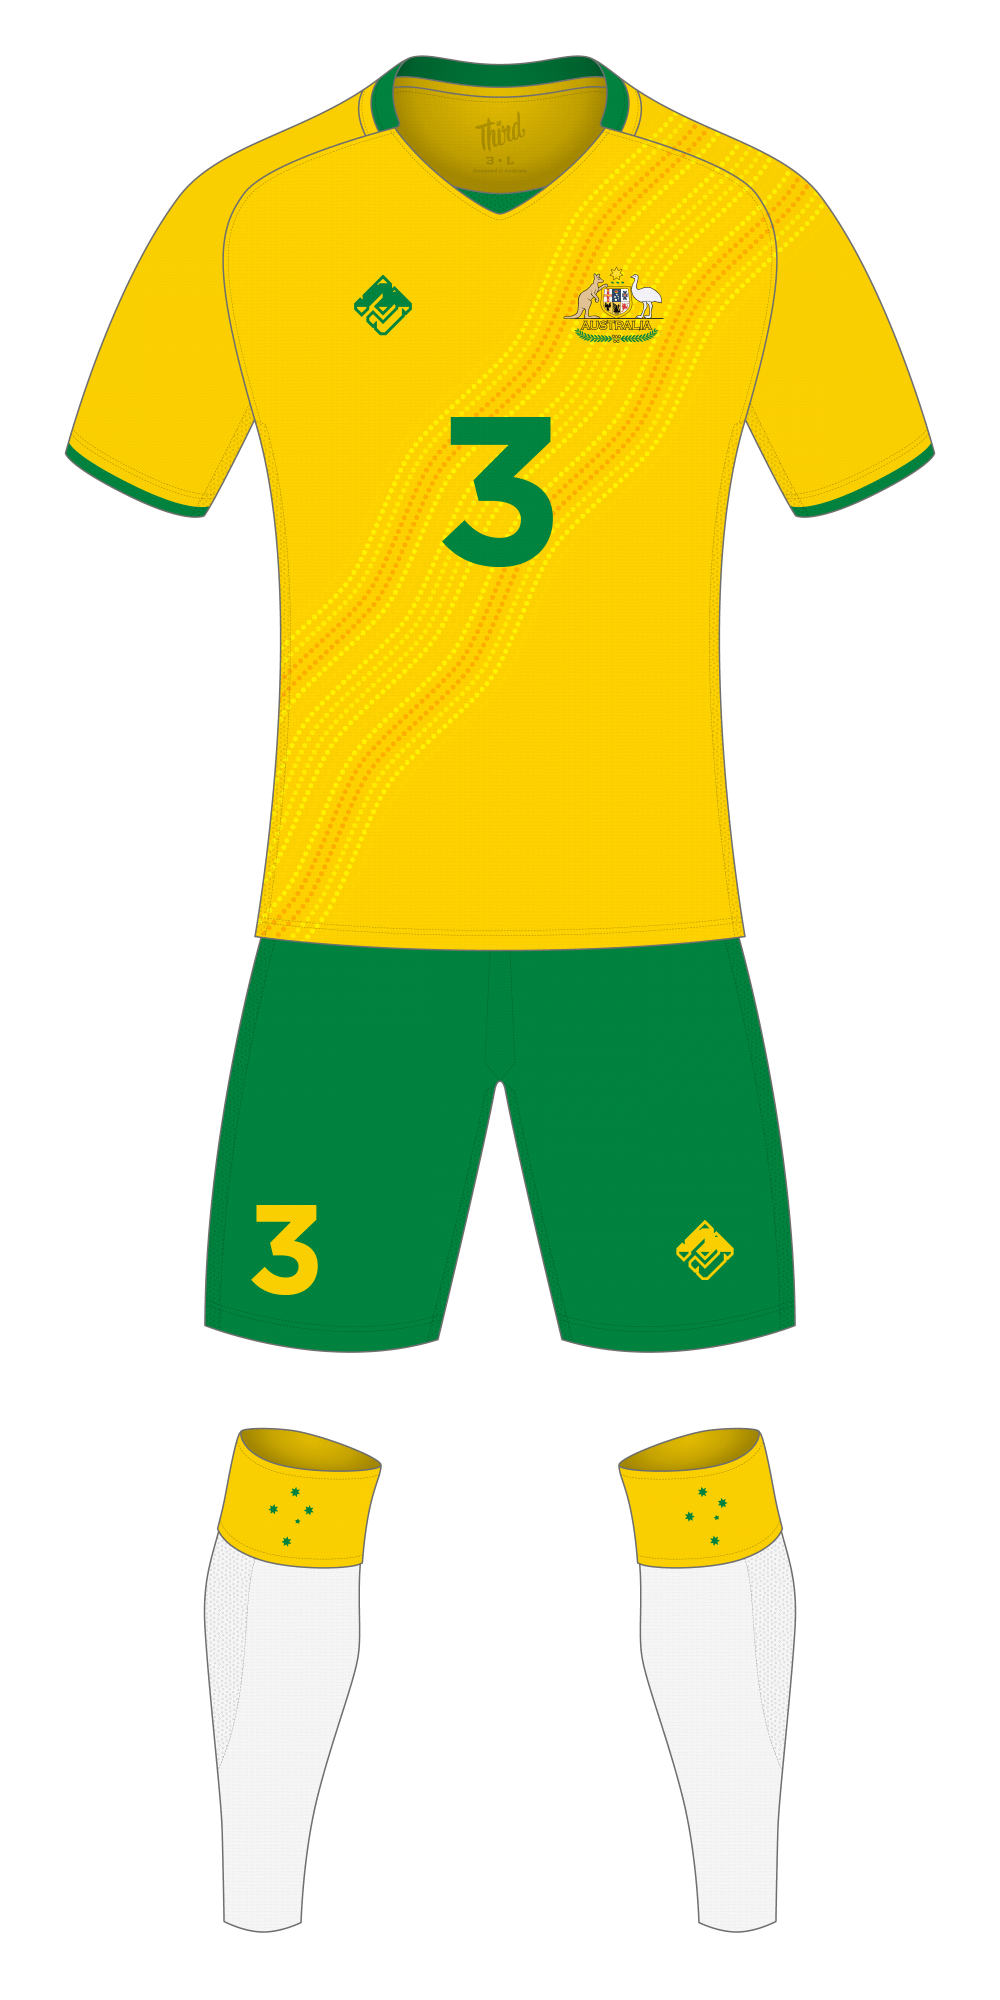 Australia World Cup 2018 concept